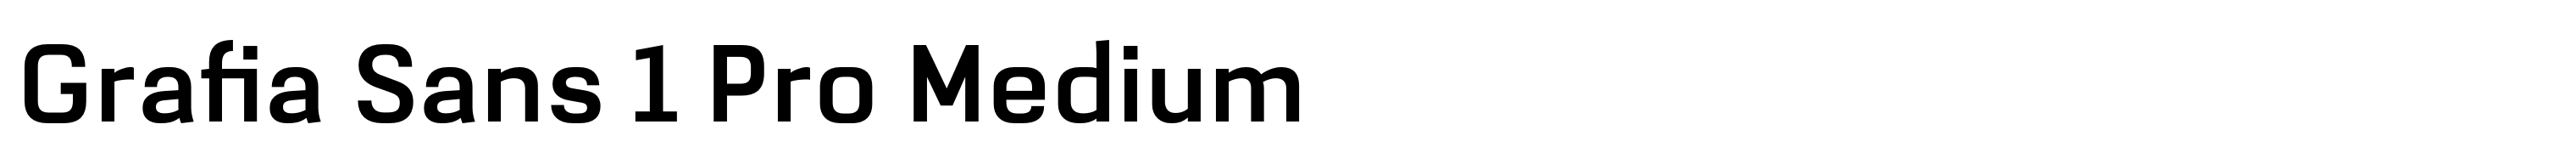 Grafia Sans 1 Pro Medium